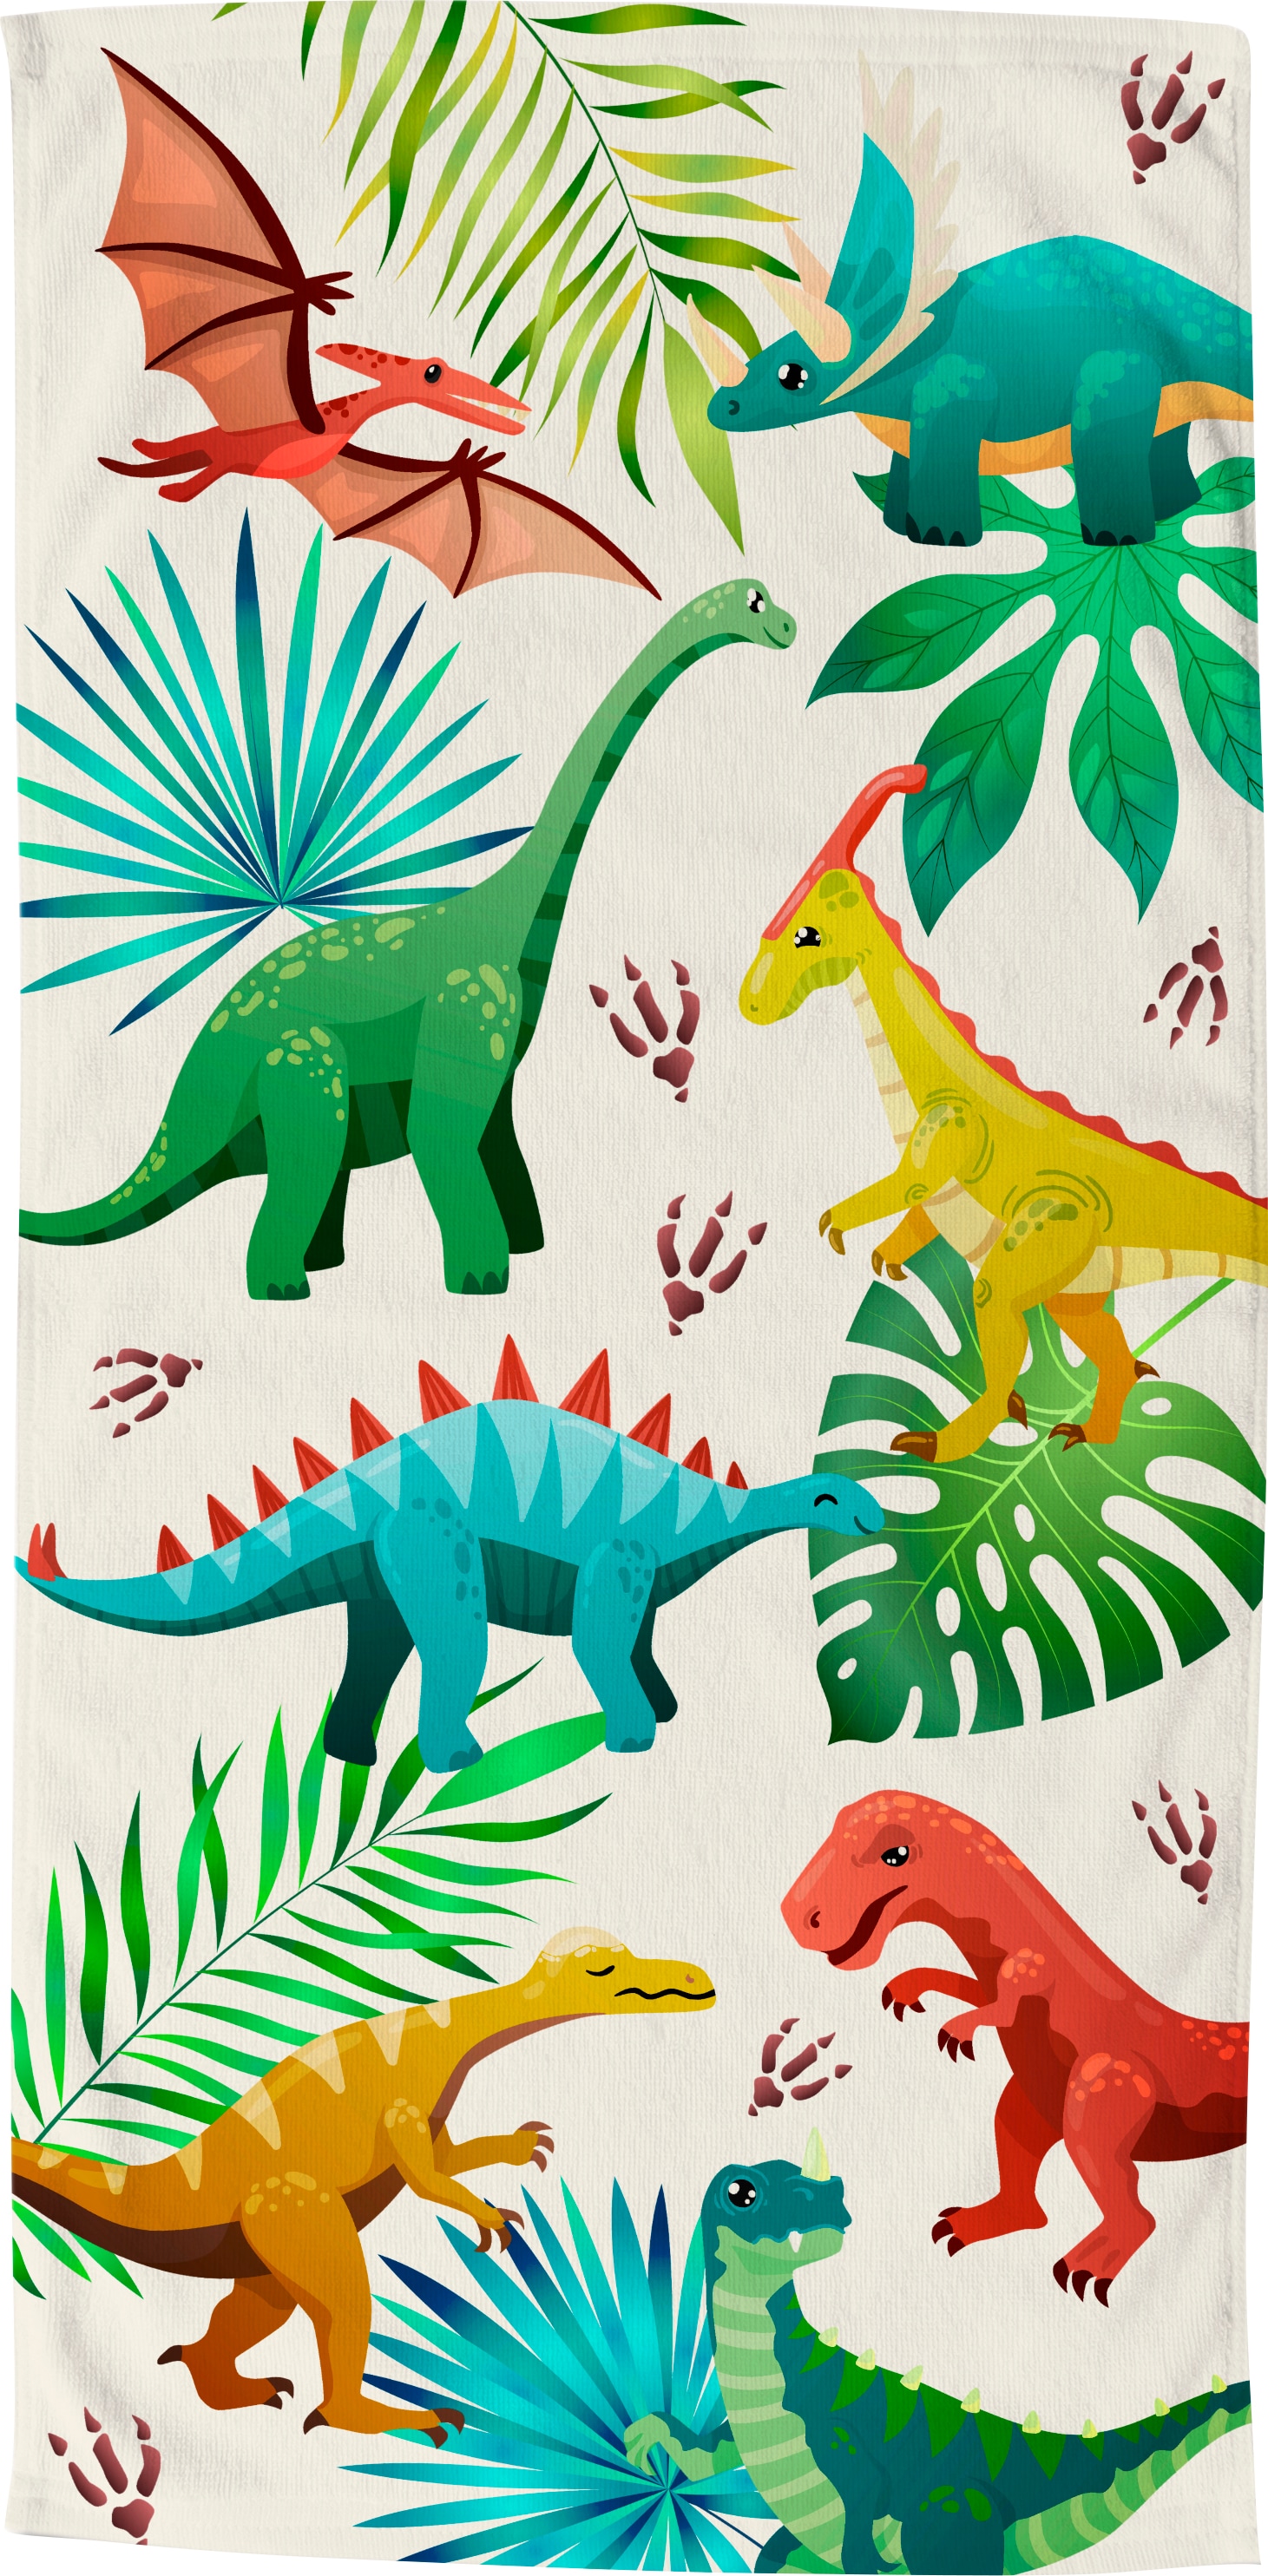 Strandtuch »Dinos«, (1 St.), Dinosaurier Motiv, trocknet schnell, Kinder